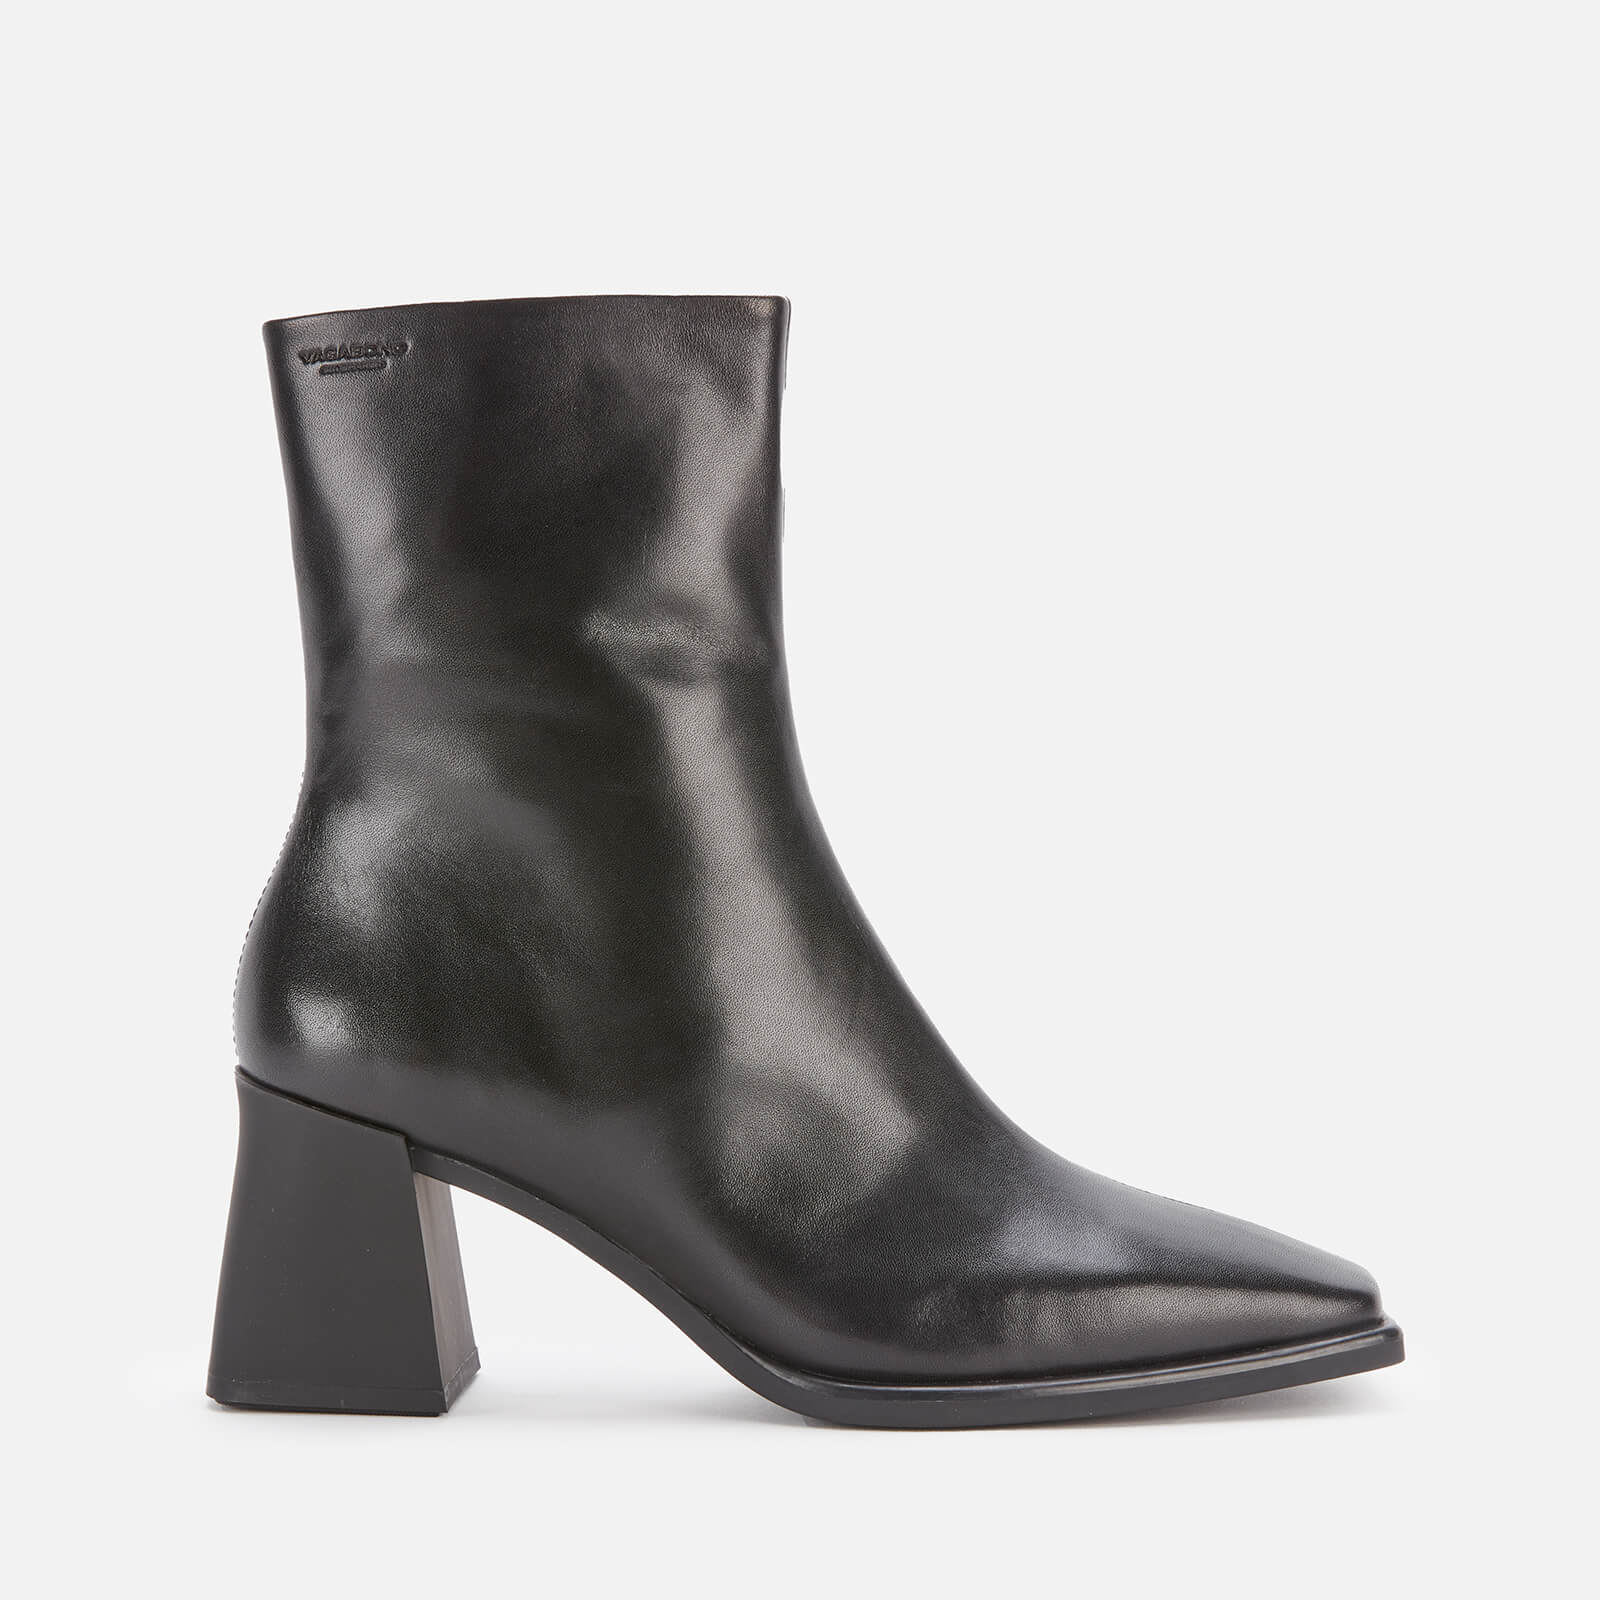 Vagabond Women’s Hedda Leather Heeled Boots - Black